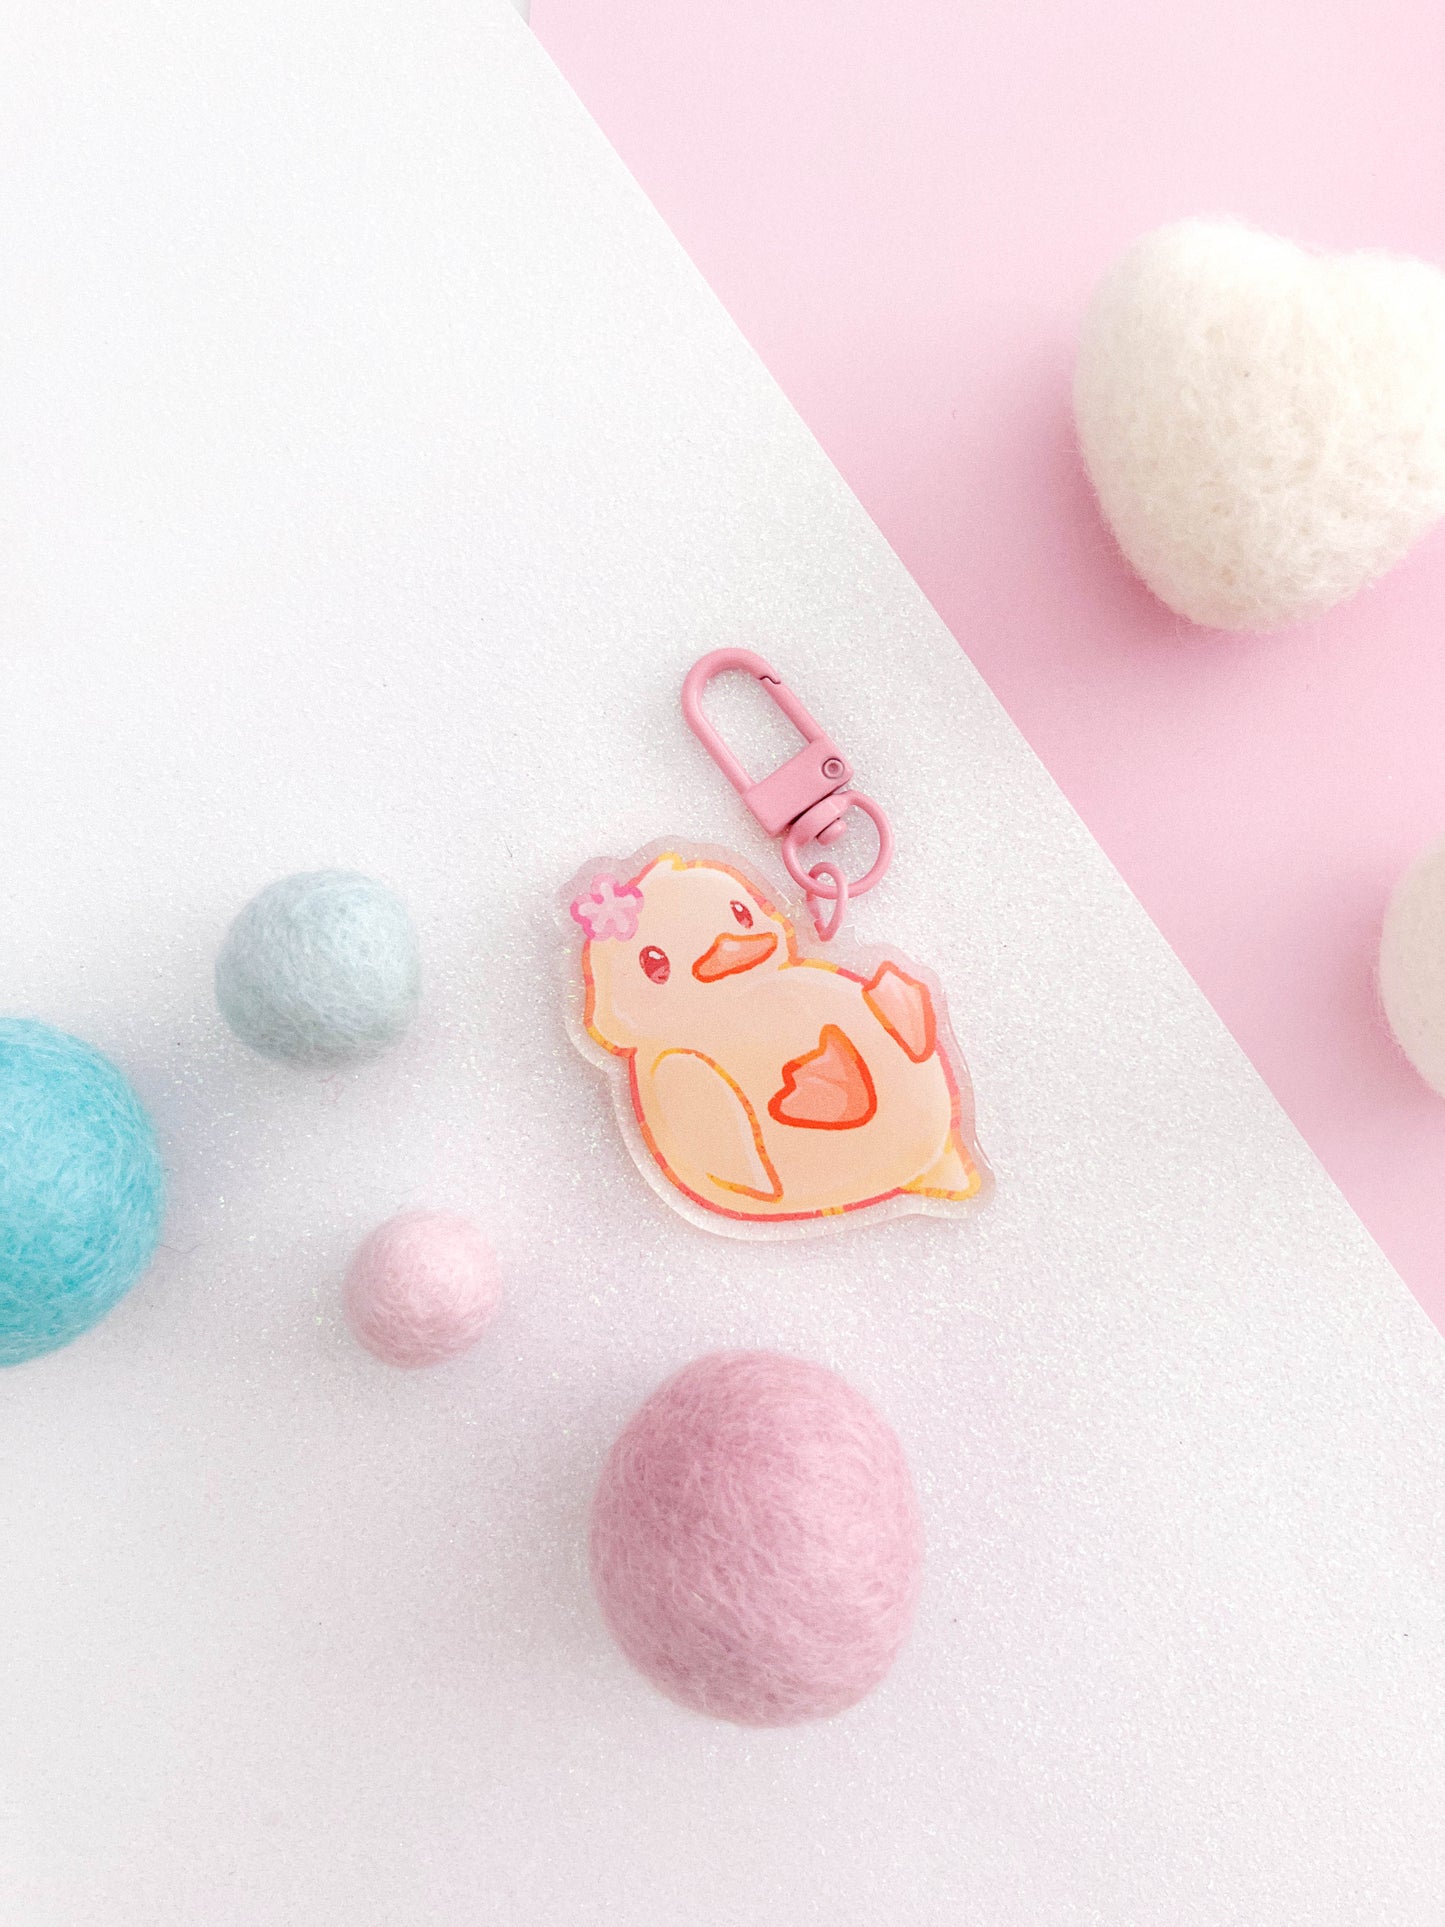 Cute Duck Acrylic Keychain | Sweet Animal Art | Duckling Key Charm | Aesthetic Birthday Gift for Her | Christmas Present | Miamouz